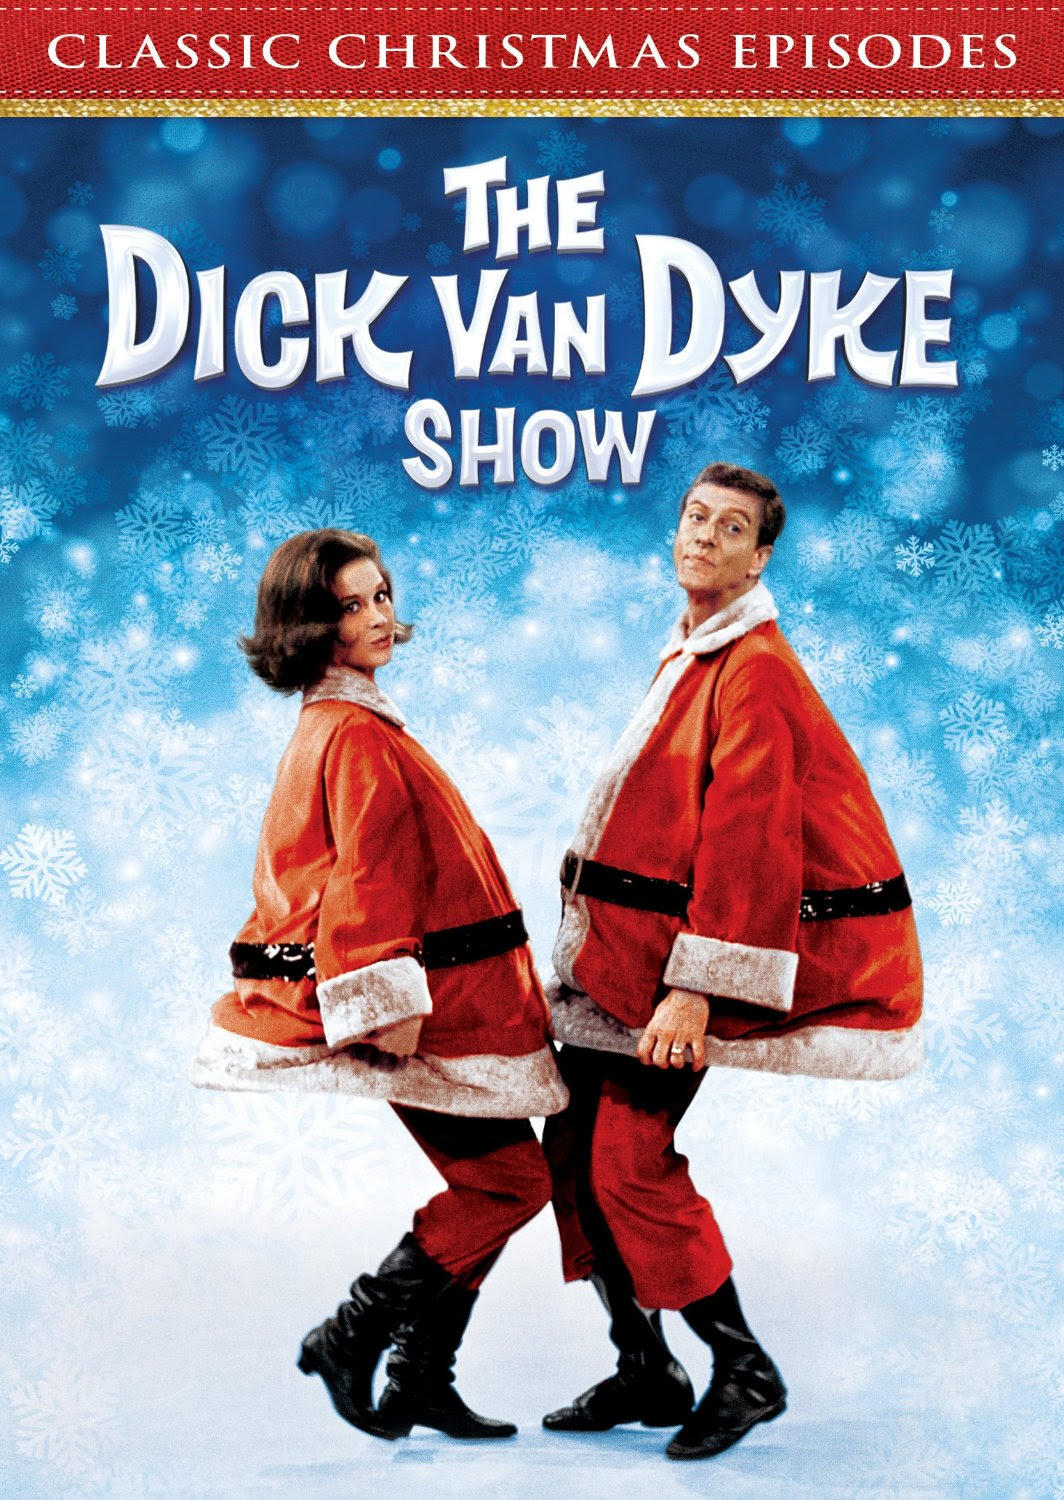 The dick van dyke show christmas show